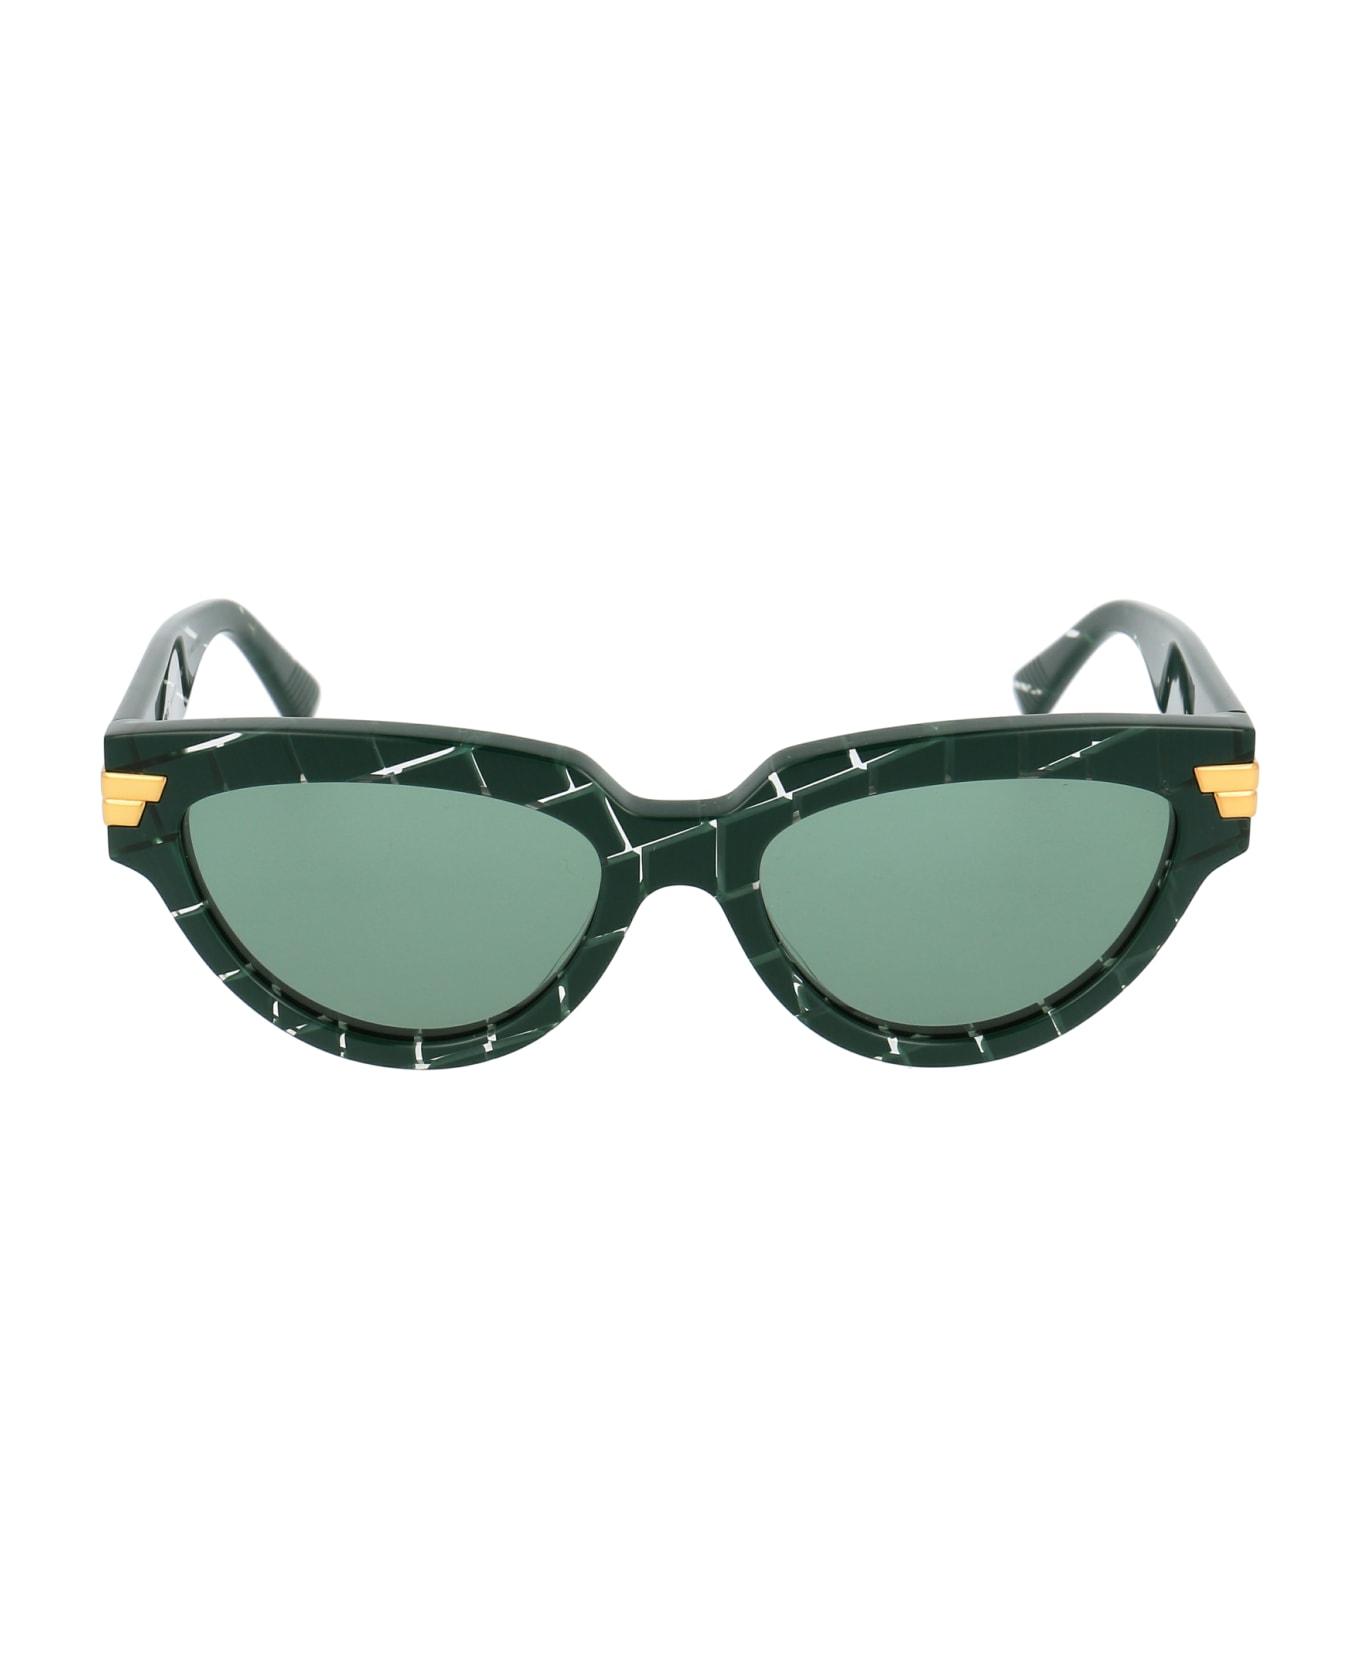 Bottega Veneta Eyewear Bv1035s Sunglasses - 004 GREEN GREEN GREEN